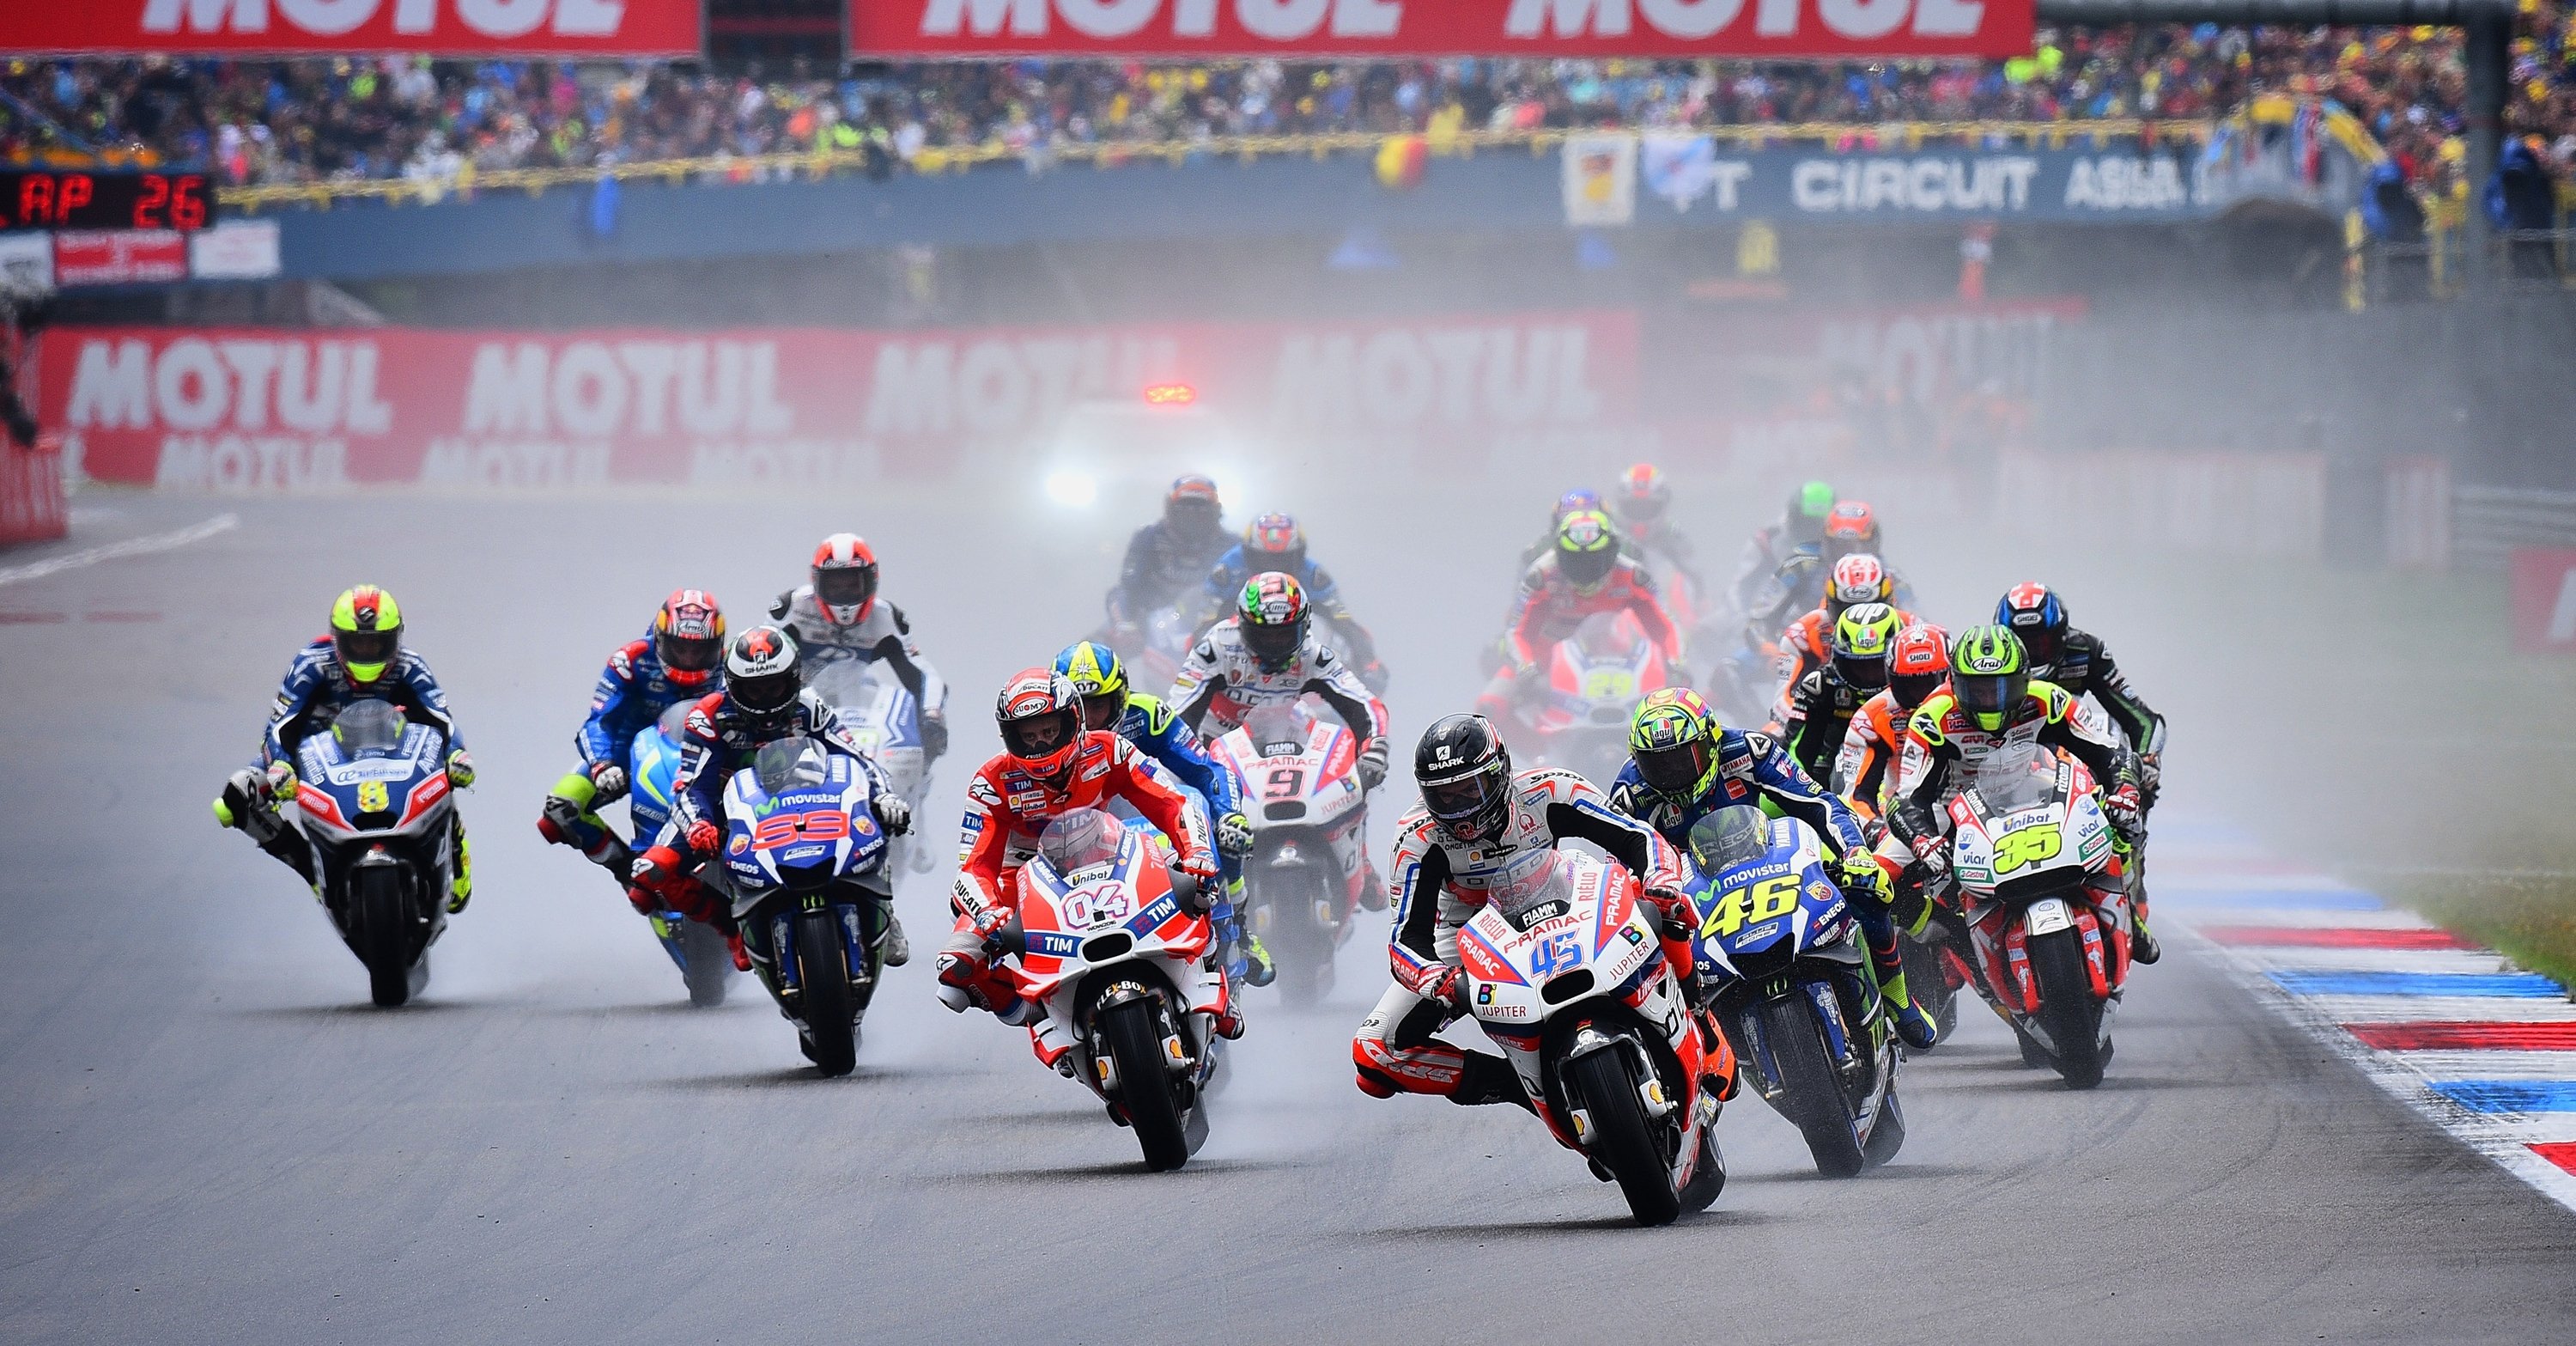 Chi vincer&agrave; la gara MotoGP di Assen?